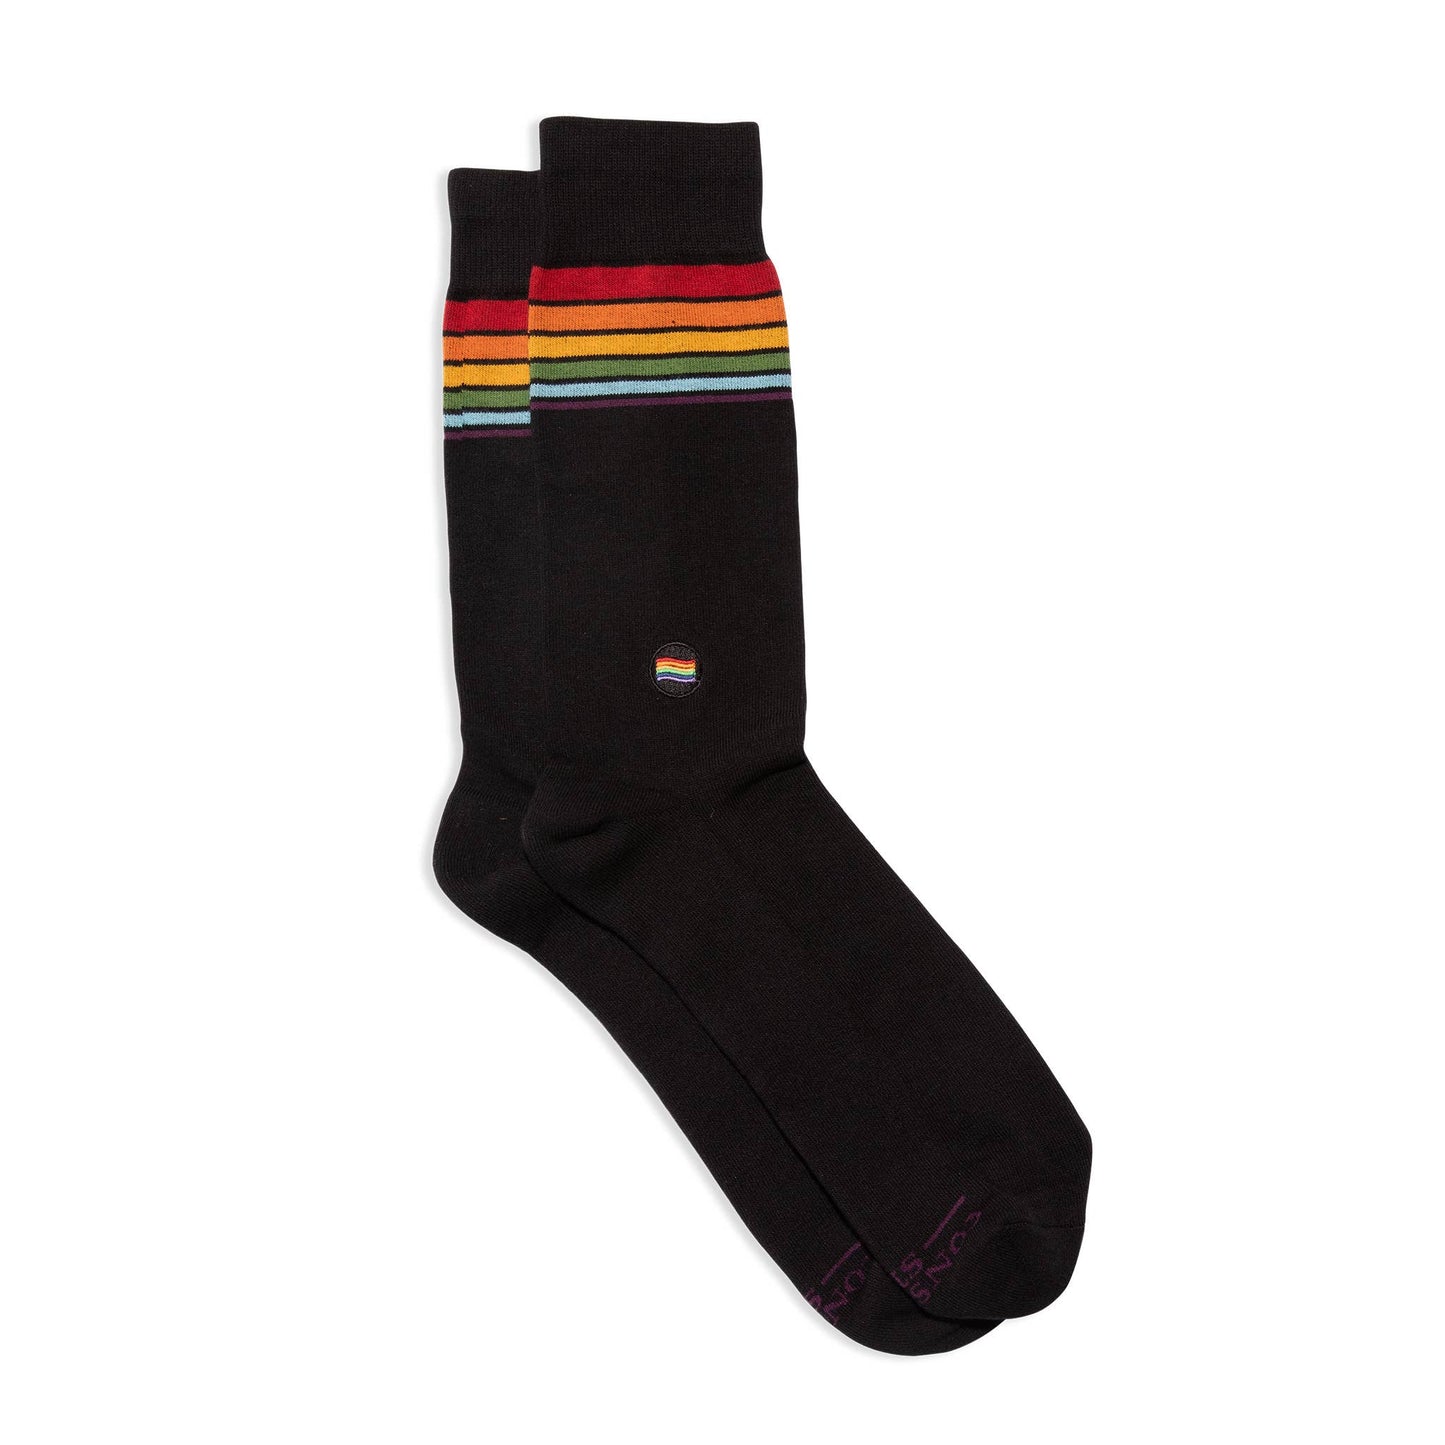 Conscious Step - Socks that Save LGBTQ Lives (Classic Rainbow Stripe)